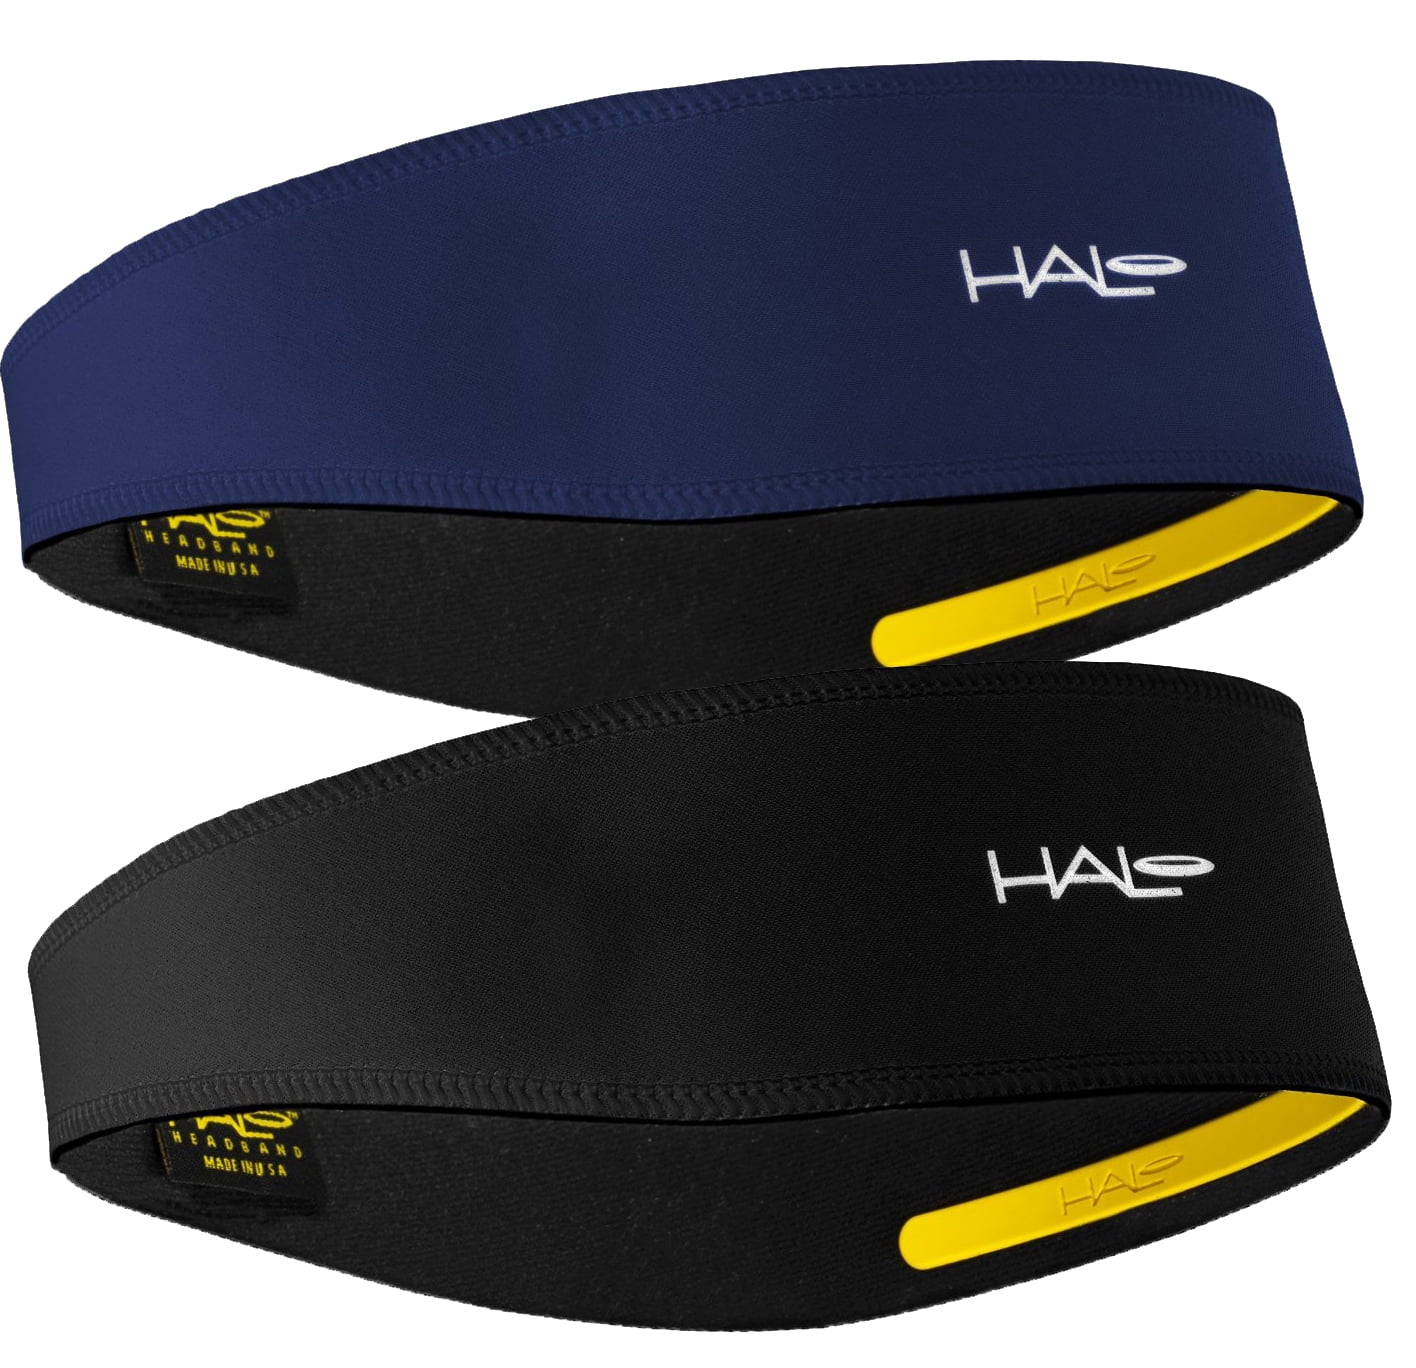 Blue Tie-Dye Halo Headband Pullover II Sweatband